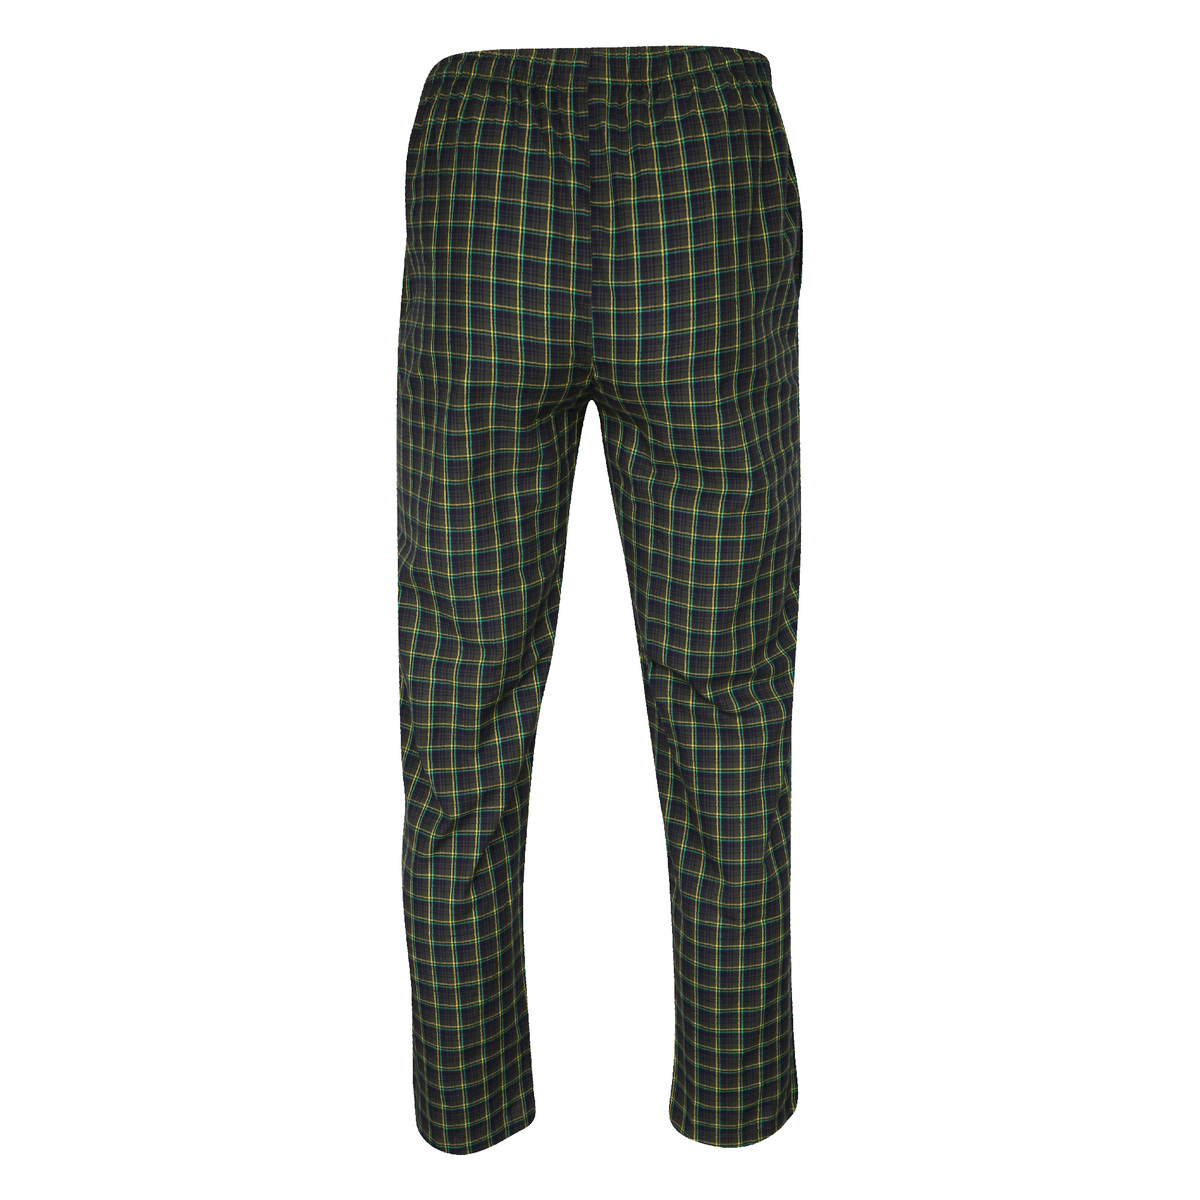 Elite Comfort Men's Woven Night Pants EM02 Green, Extra Large